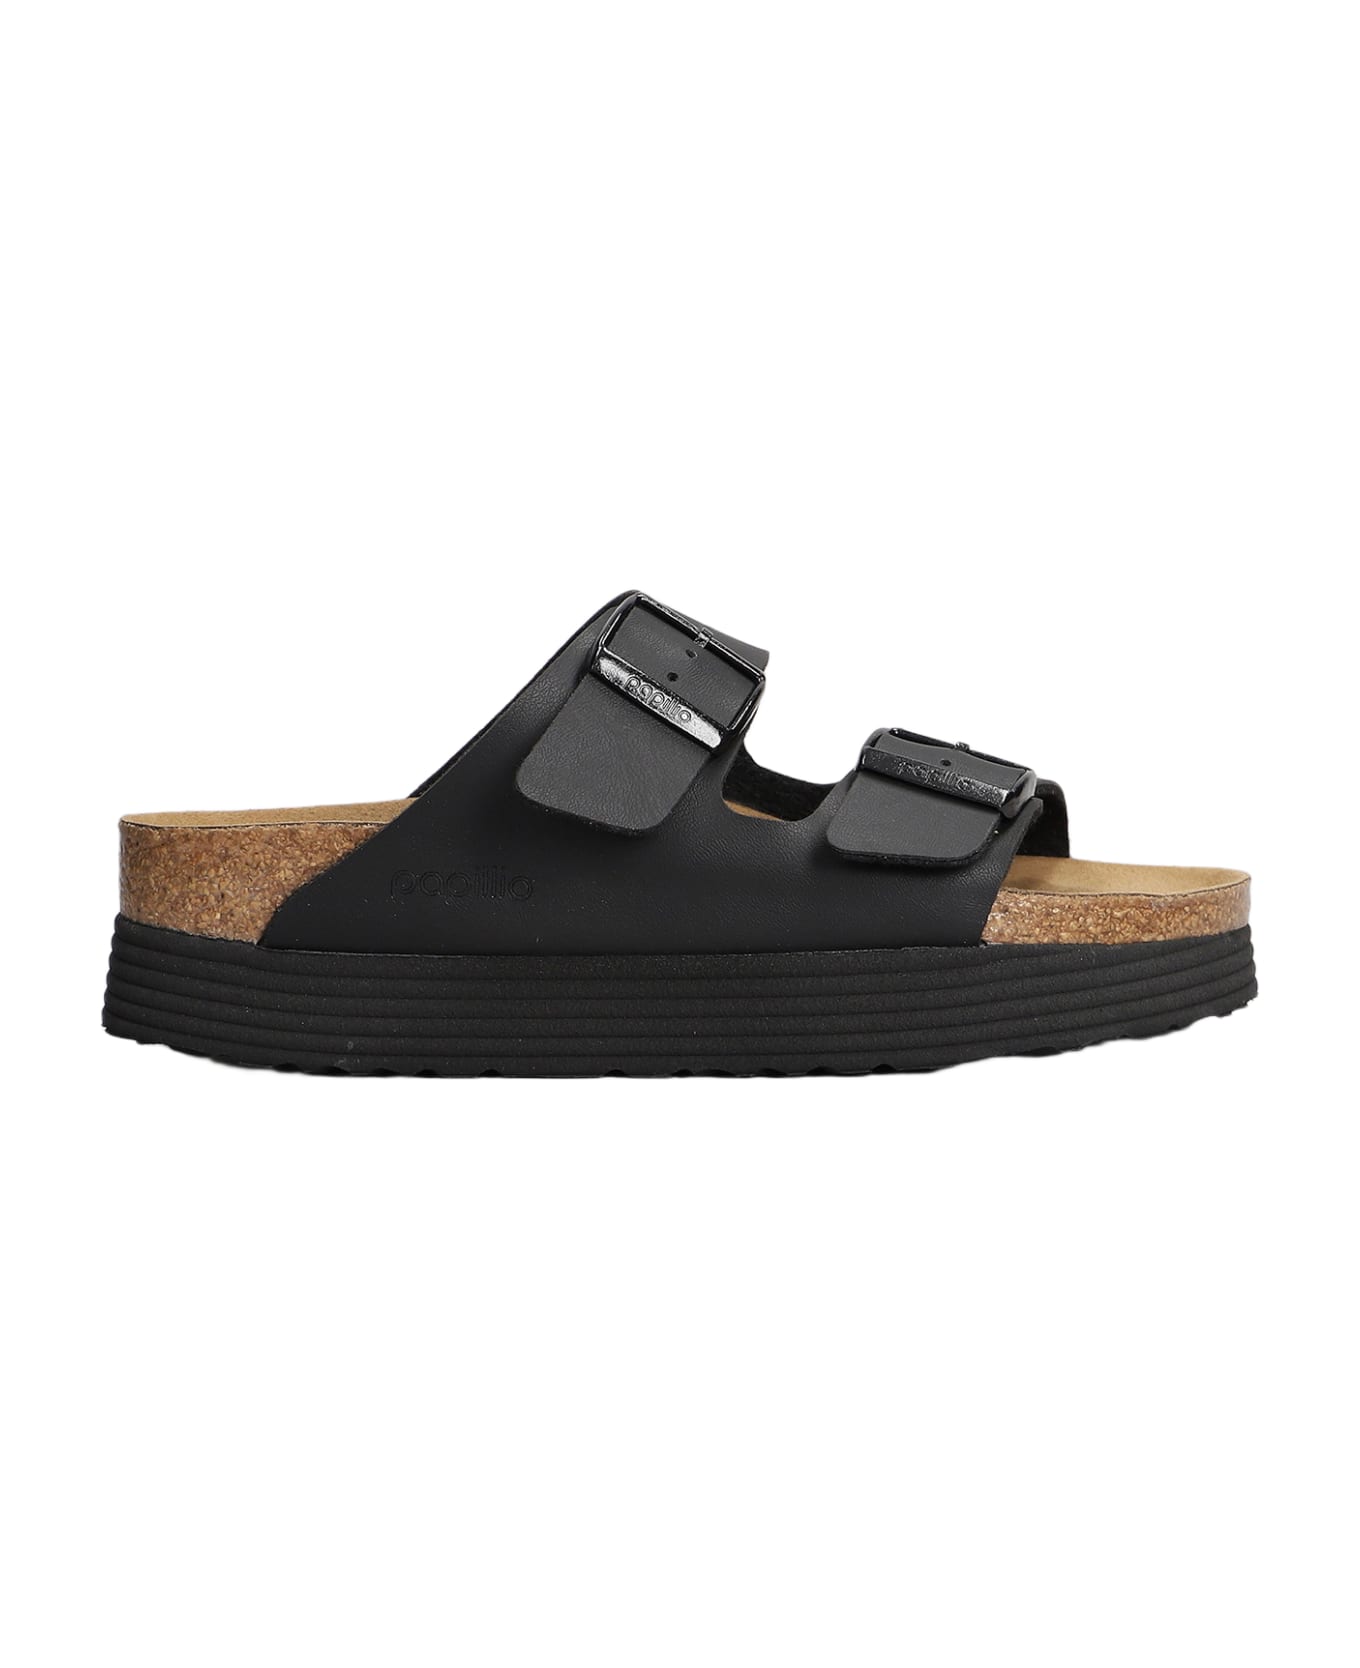 Birkenstock Arizona Grooved Sandals - Black